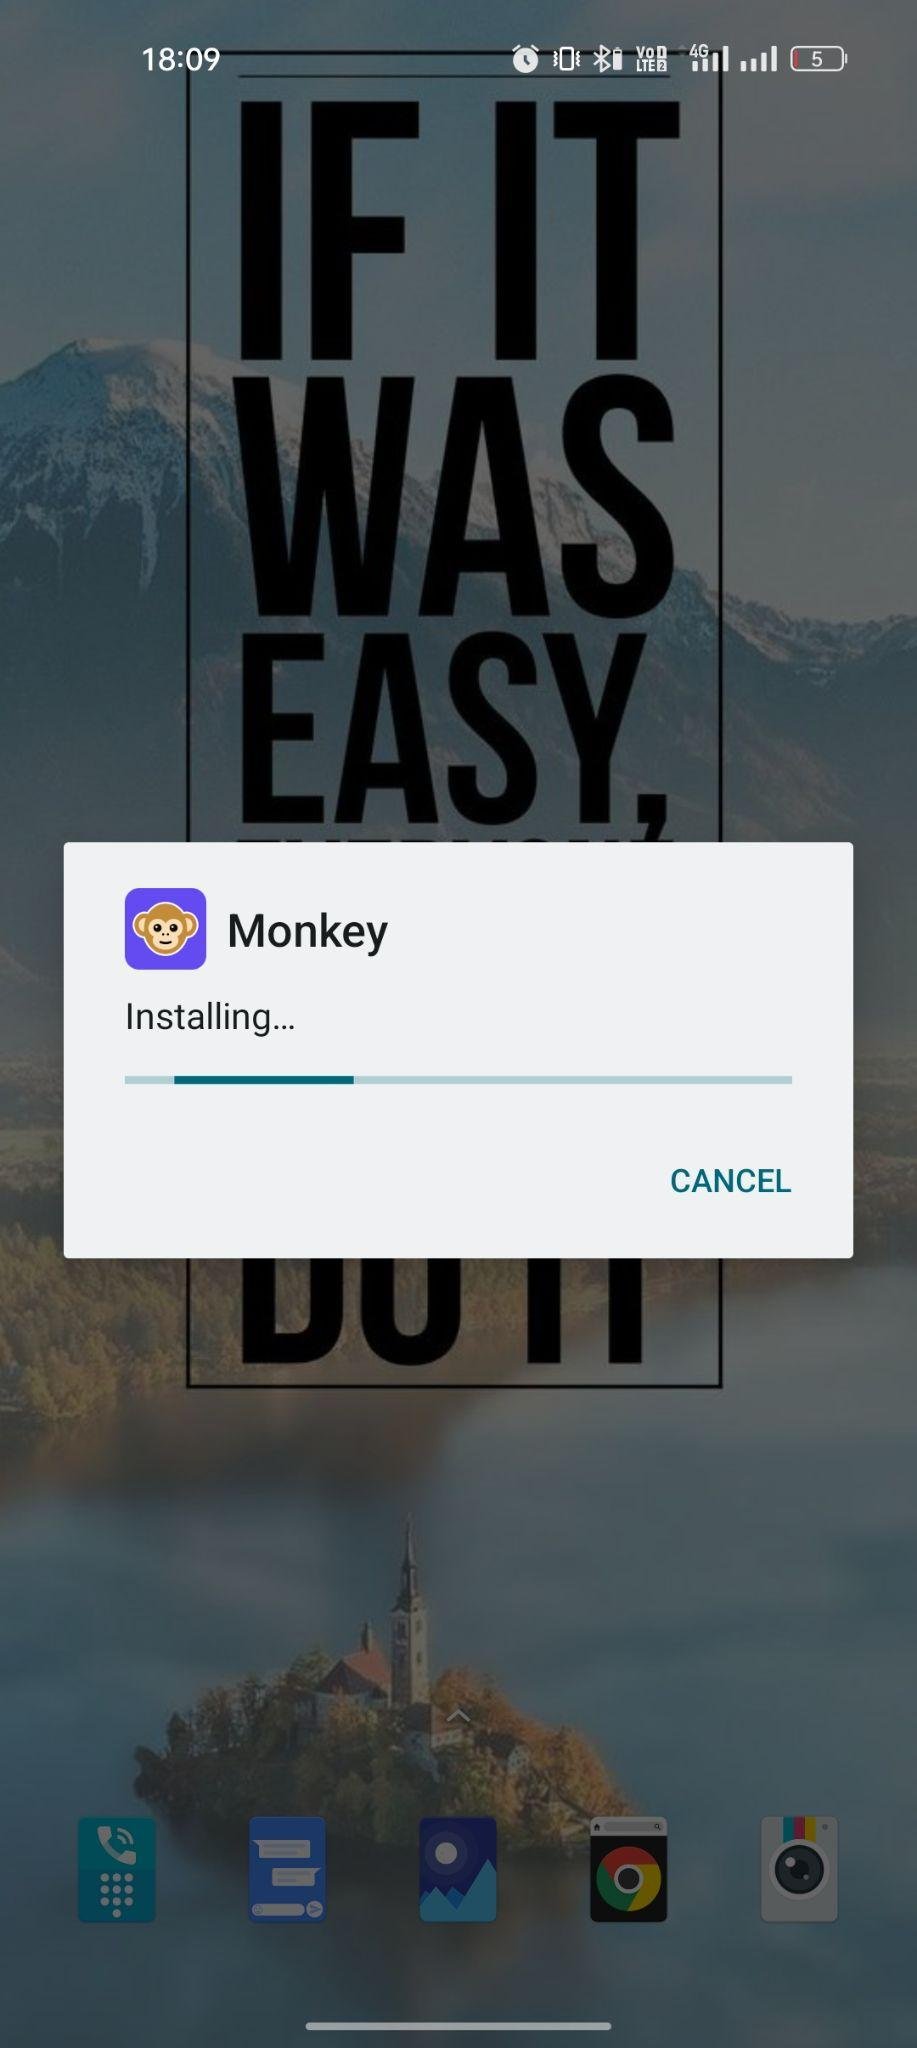 Monkey apk installing